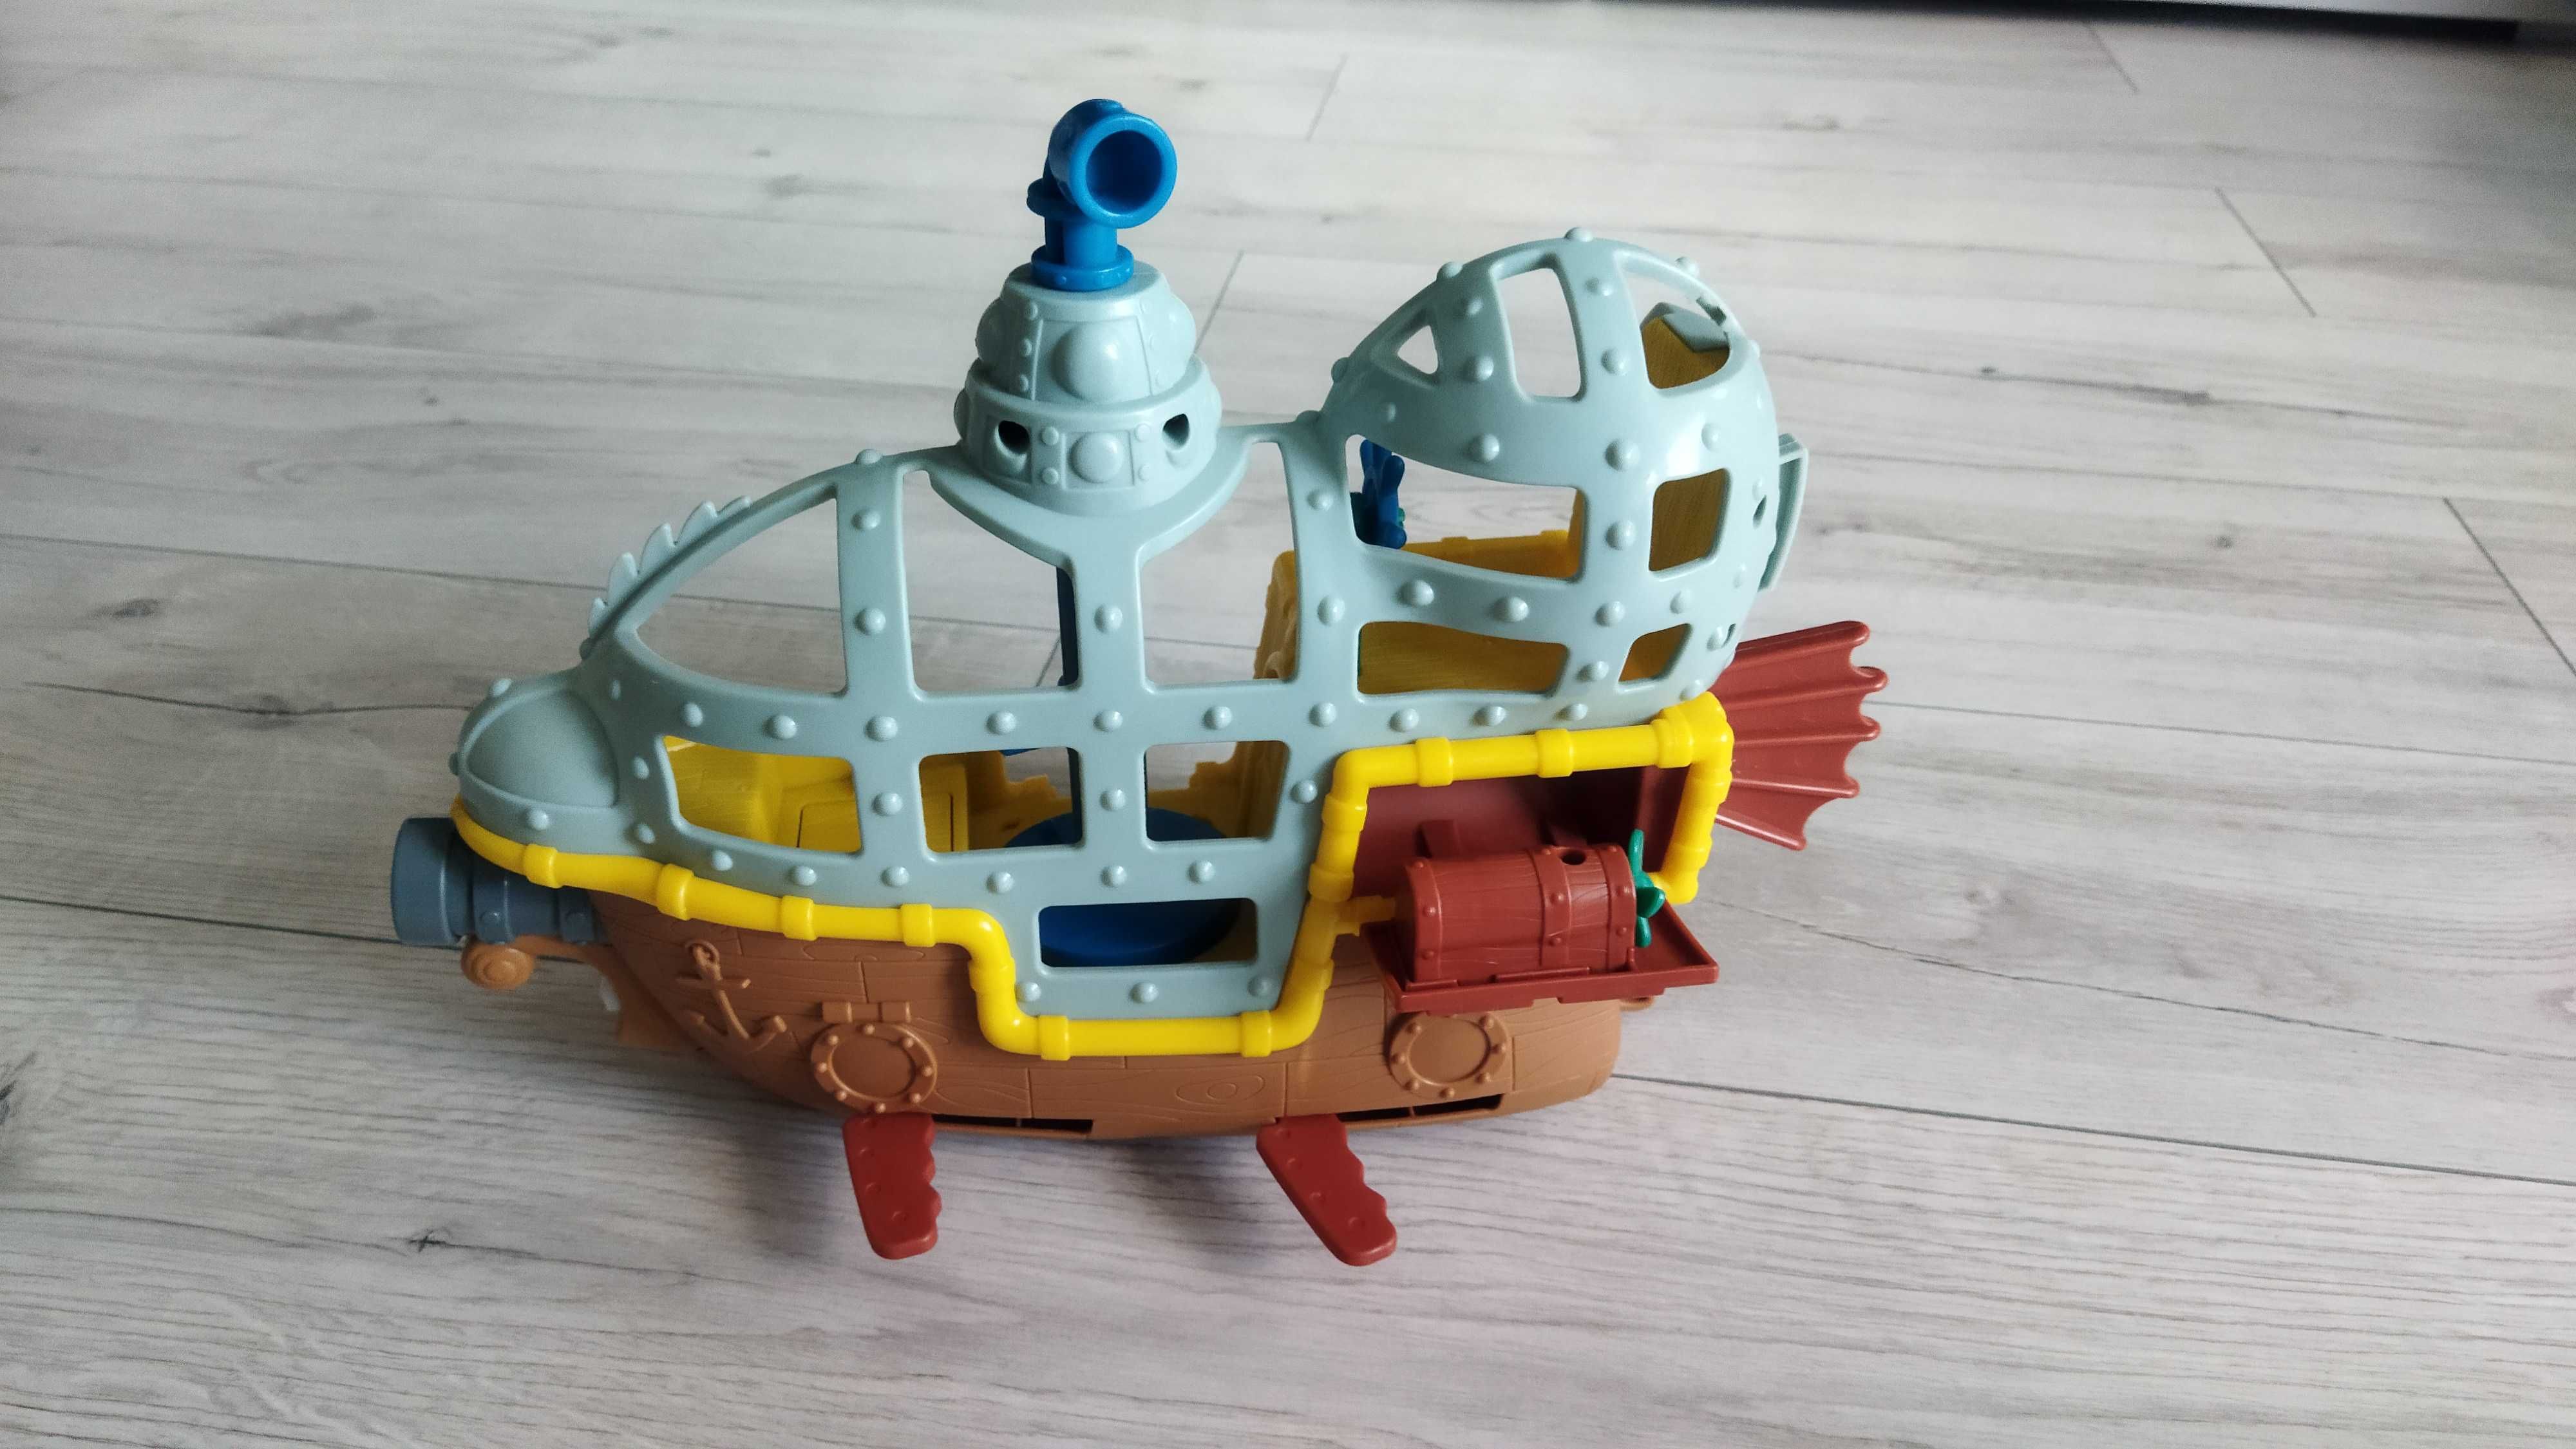 Łódź podwodna Jake Fischer Price statek Jake i piraci z Nibylandii